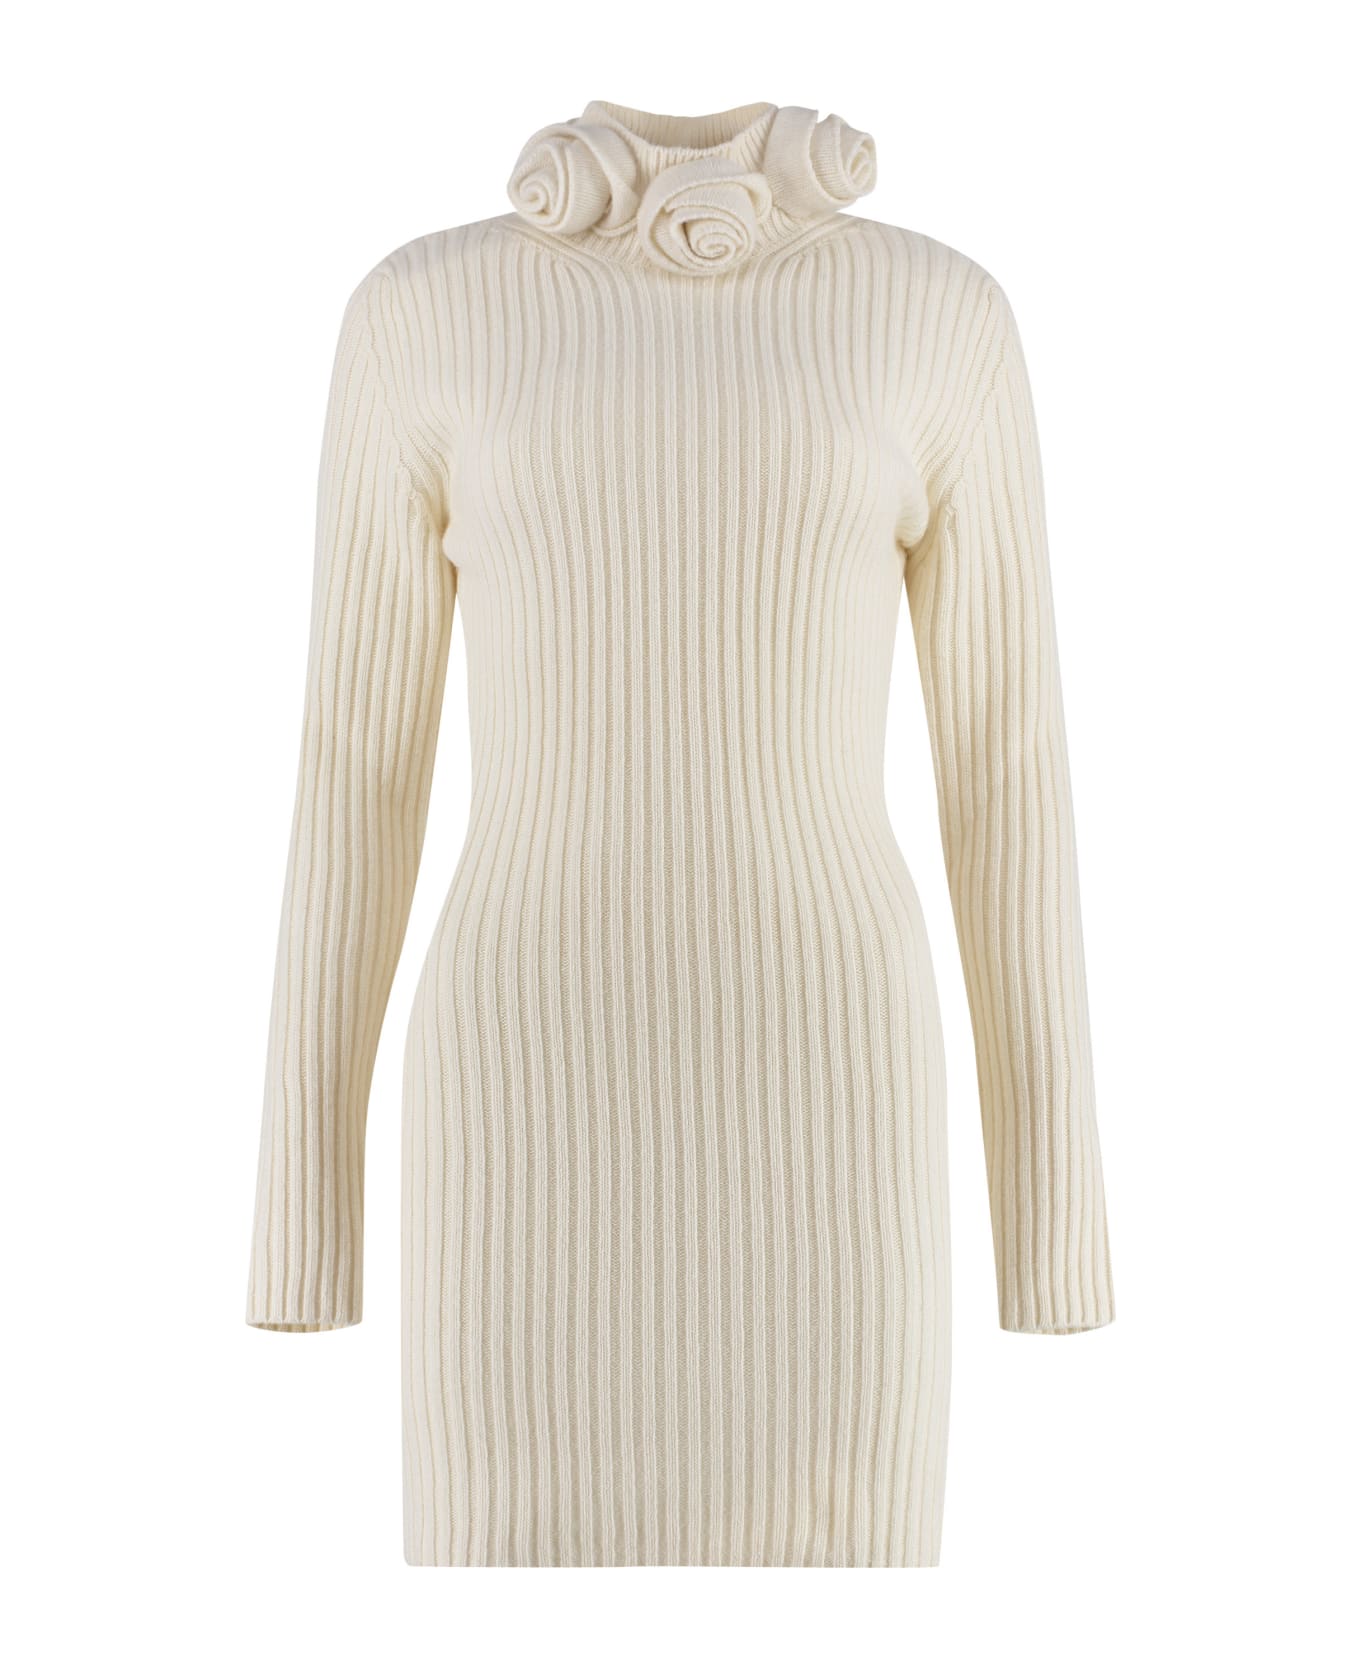 Blumarine Virgin Wool Dress - Ivory